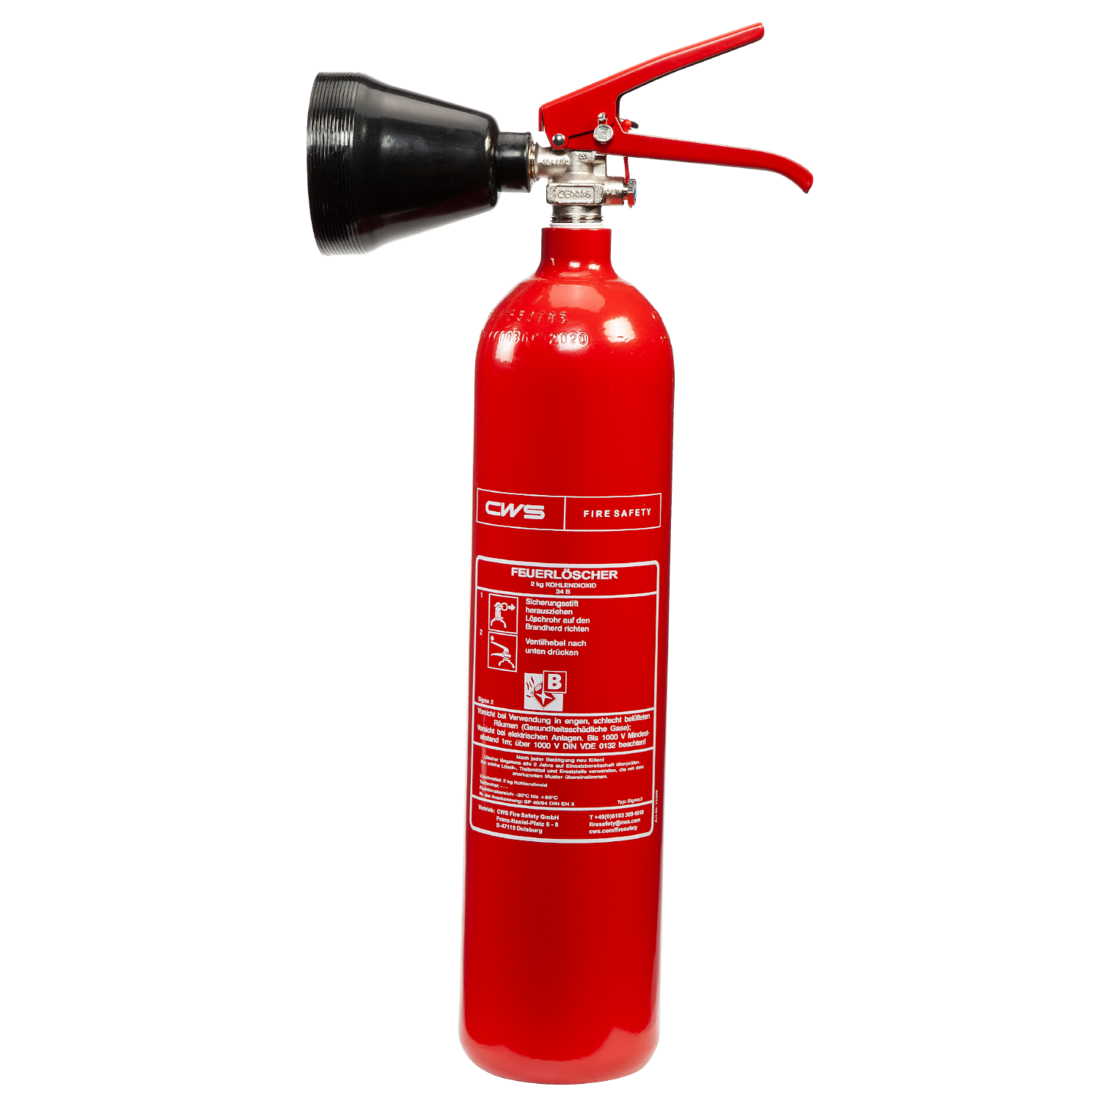 Carbon dioxide fire extinguishers 